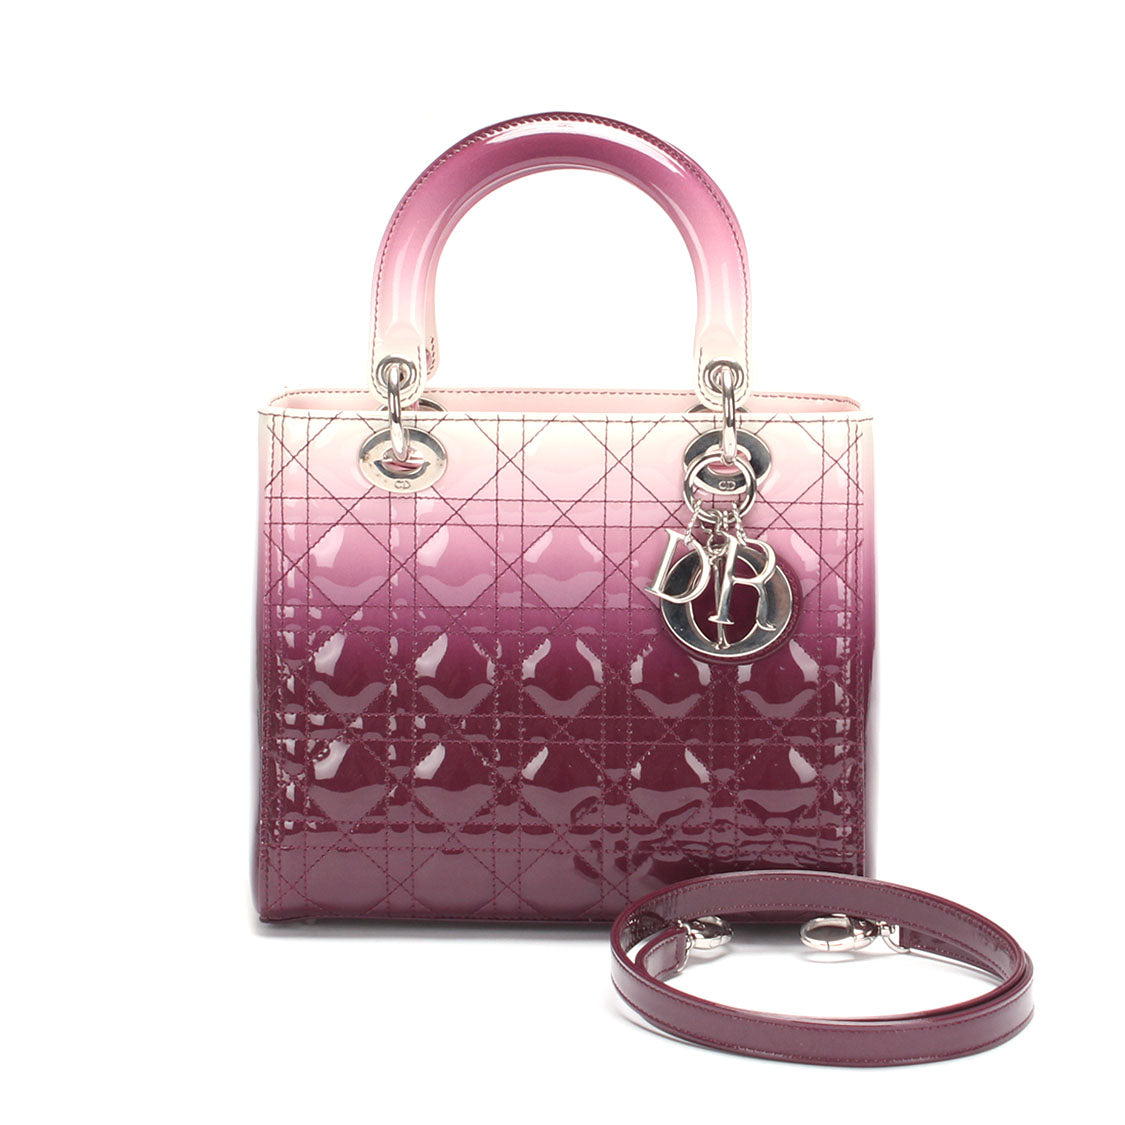 Lady Dior patent leather handbag